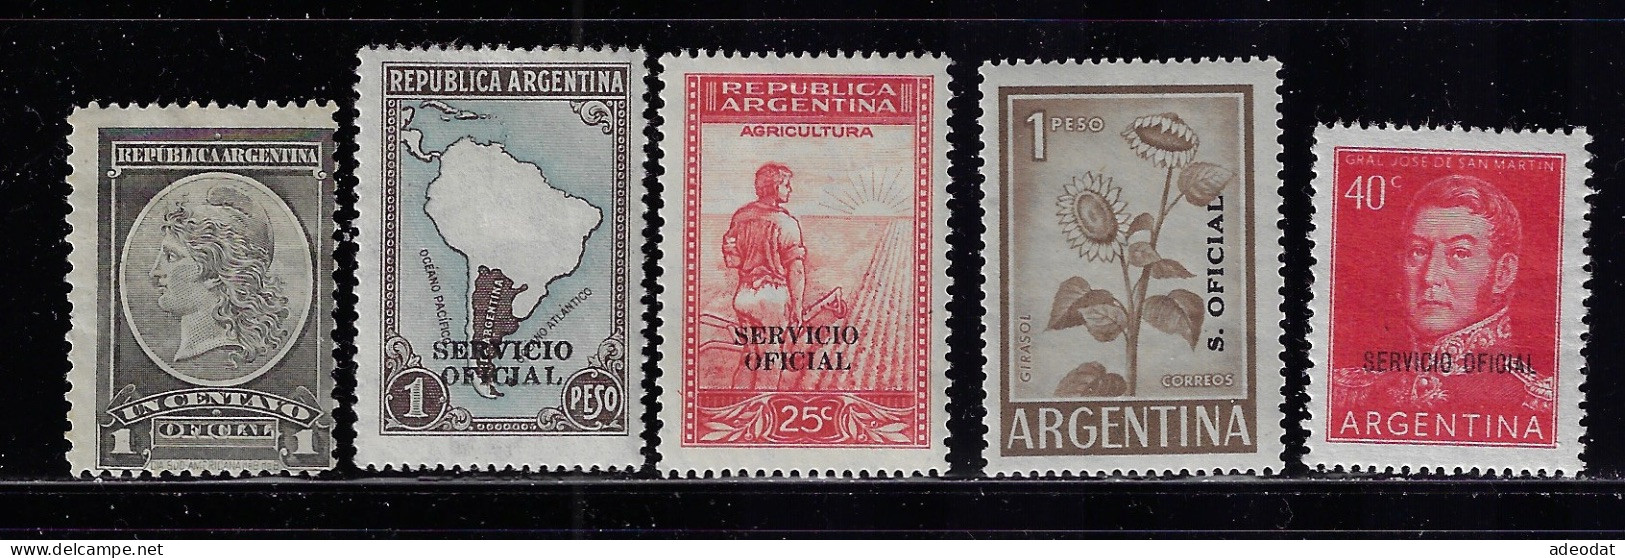 ARGENTINA 1901-1960  OFFICIAL STAMPS  SCOTT #O31,O49,O51,O96,O116  MH - Unused Stamps